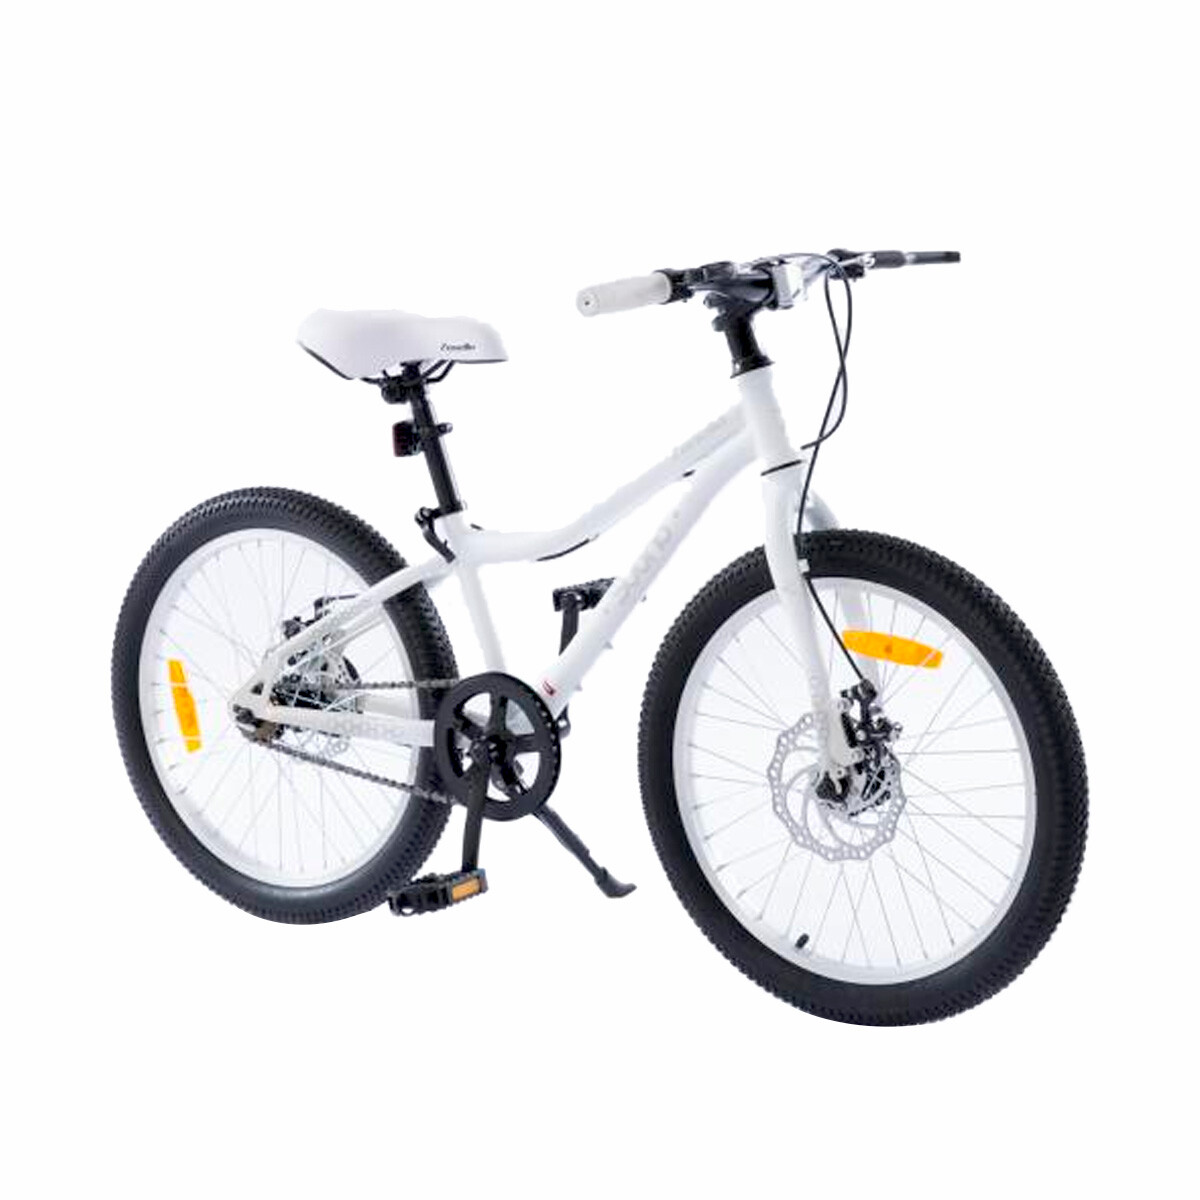 Bicicleta infantil Zanella Suono rod 20 Blanca - 001 